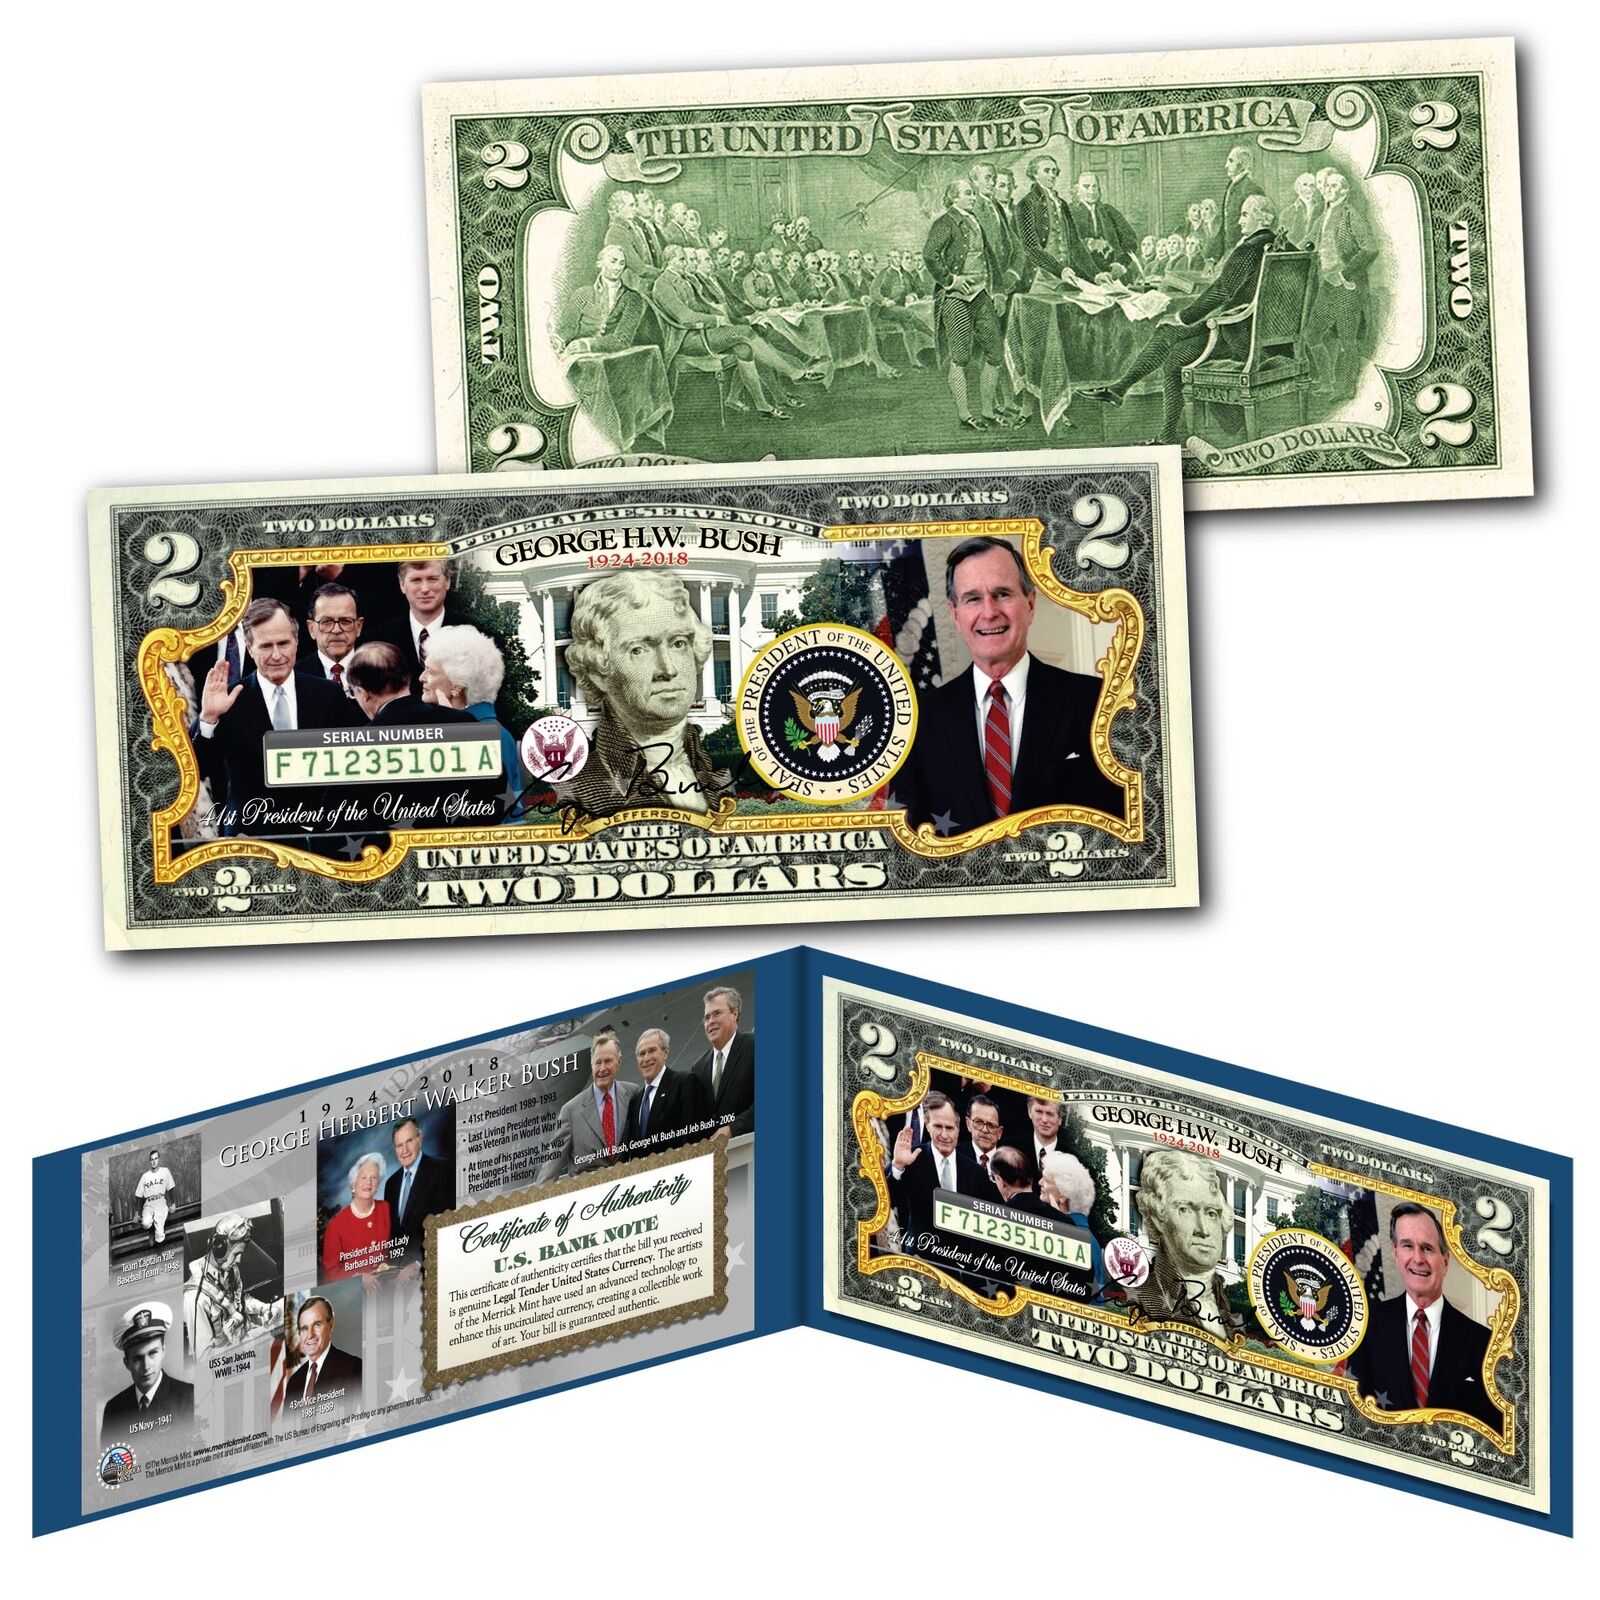 GEORGE H.W. BUSH 1924-2018 Commemorative Official 41st President U.S. $2 Bill